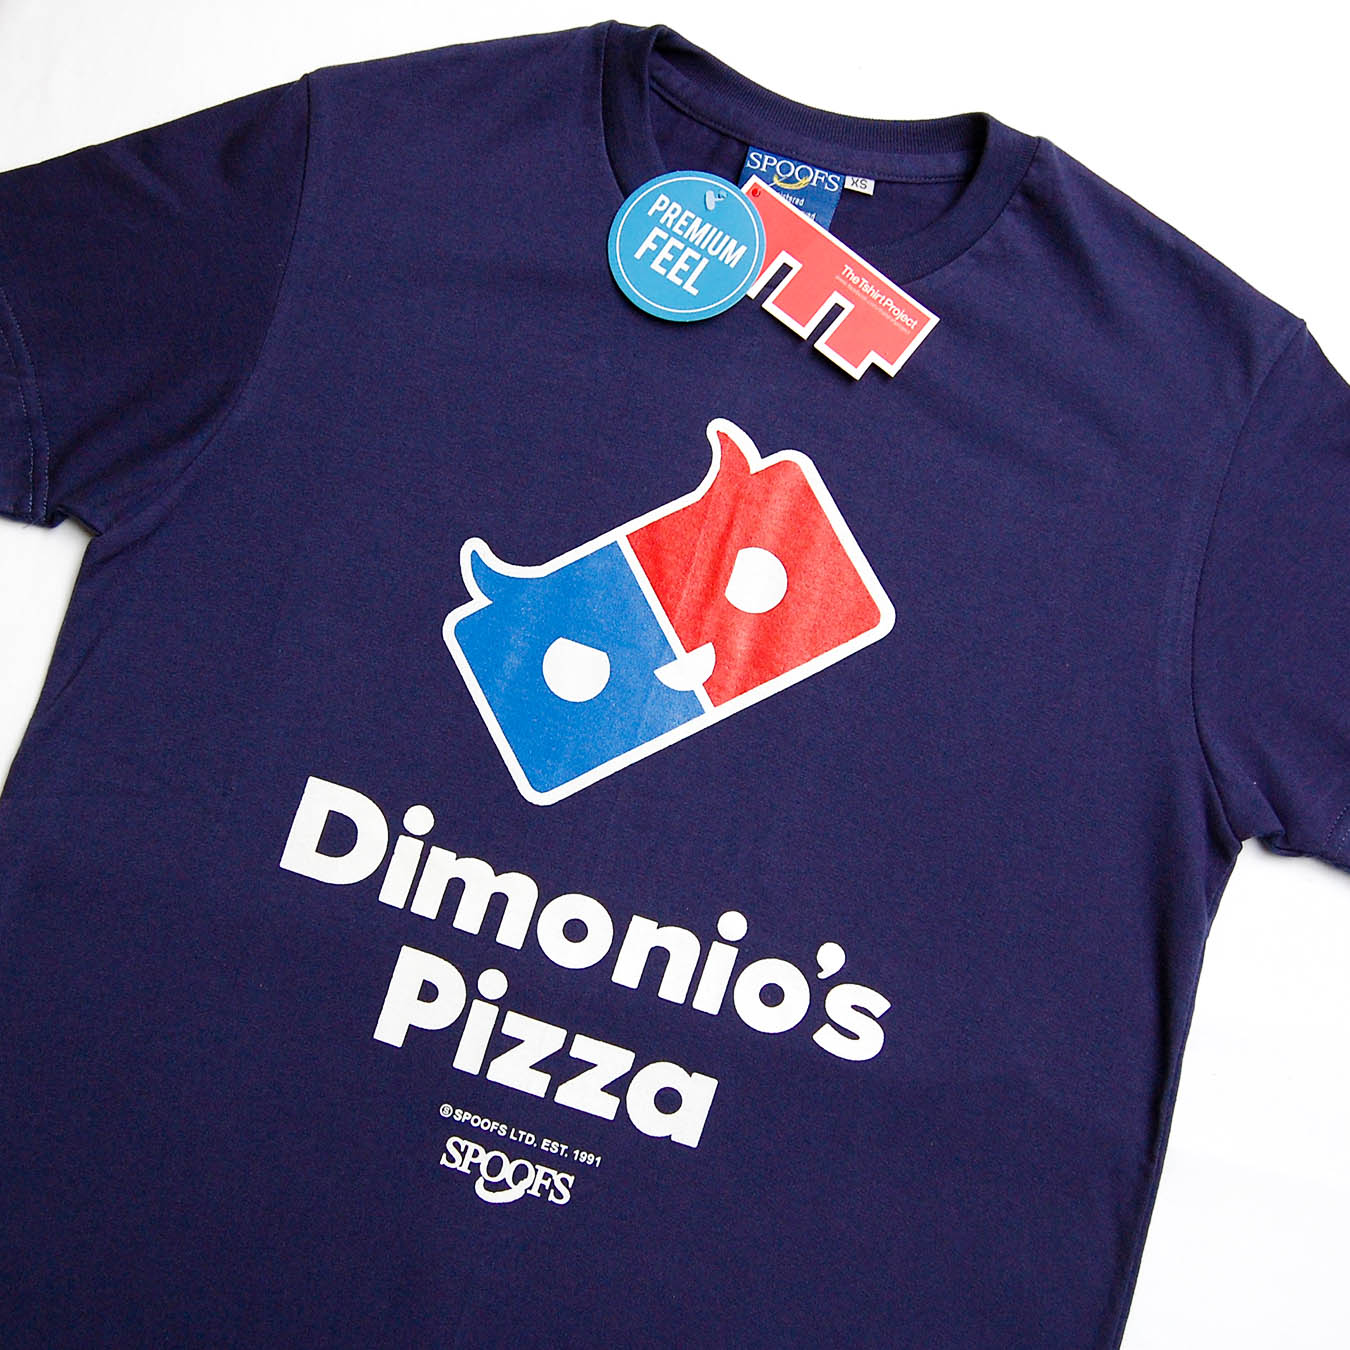 Dimonio's Pizza (Navy Blue)